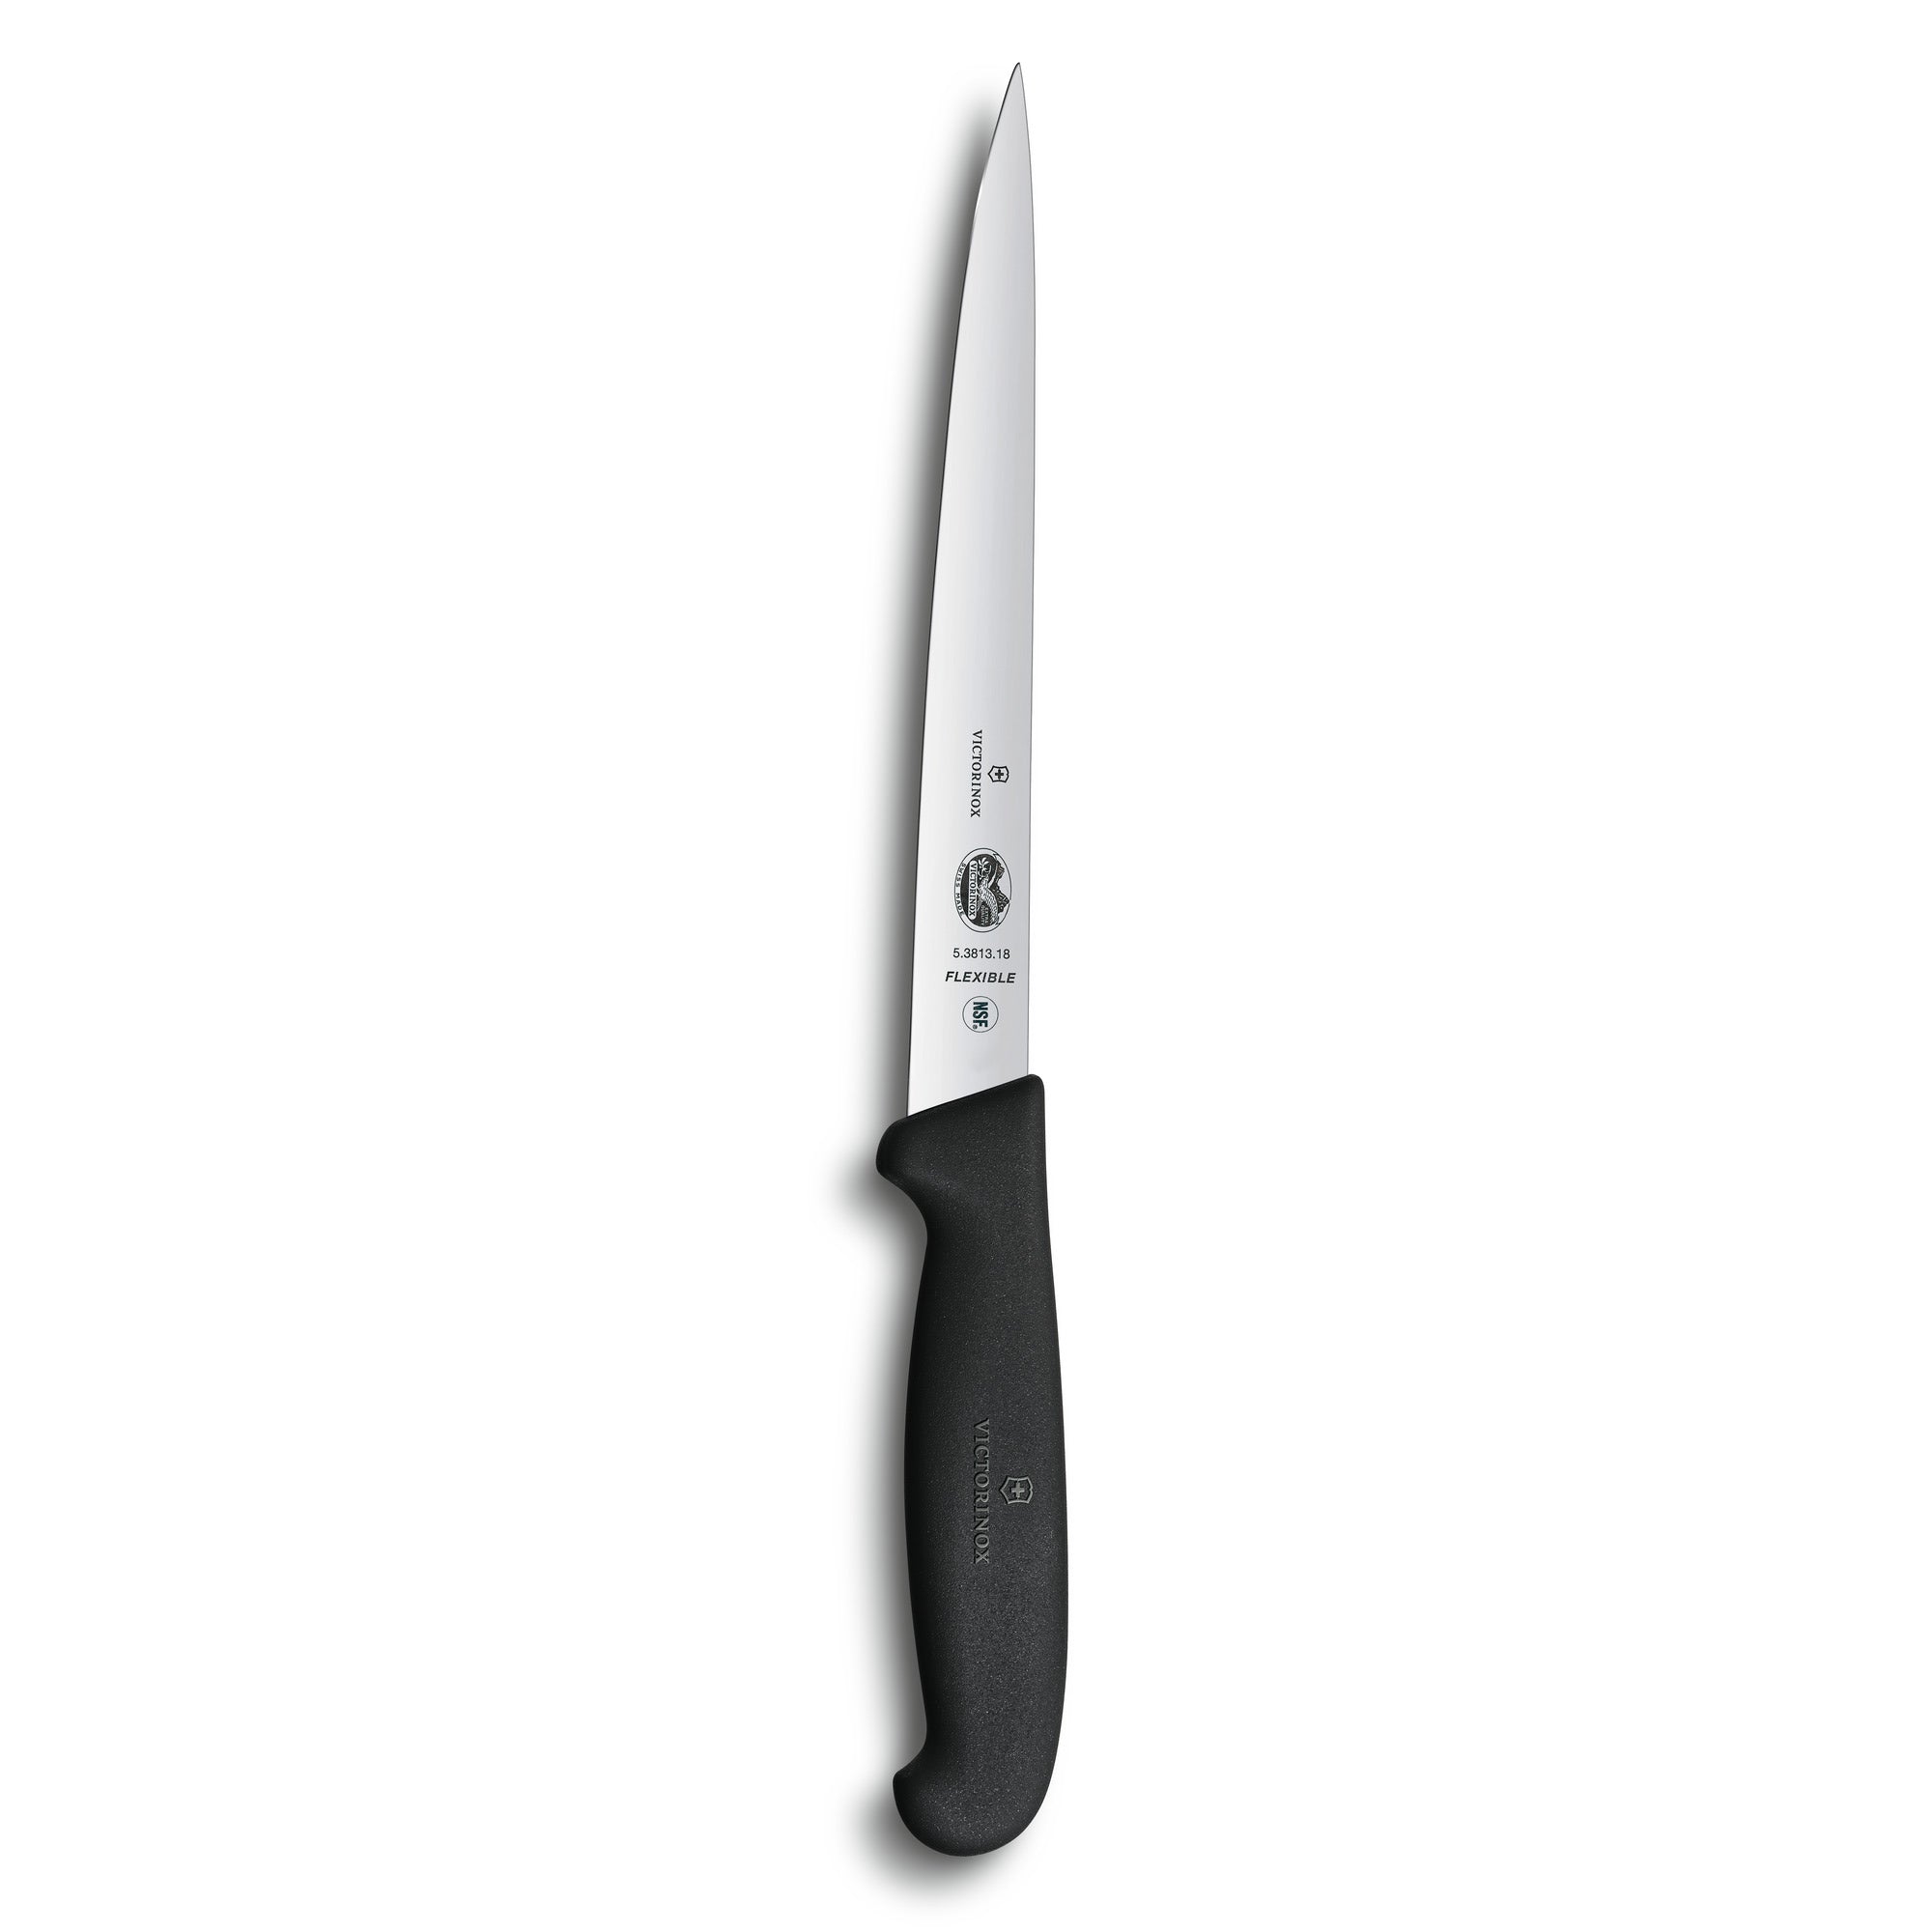 Victorinox Fibrox Pro 7” Flexible Fillet Knife